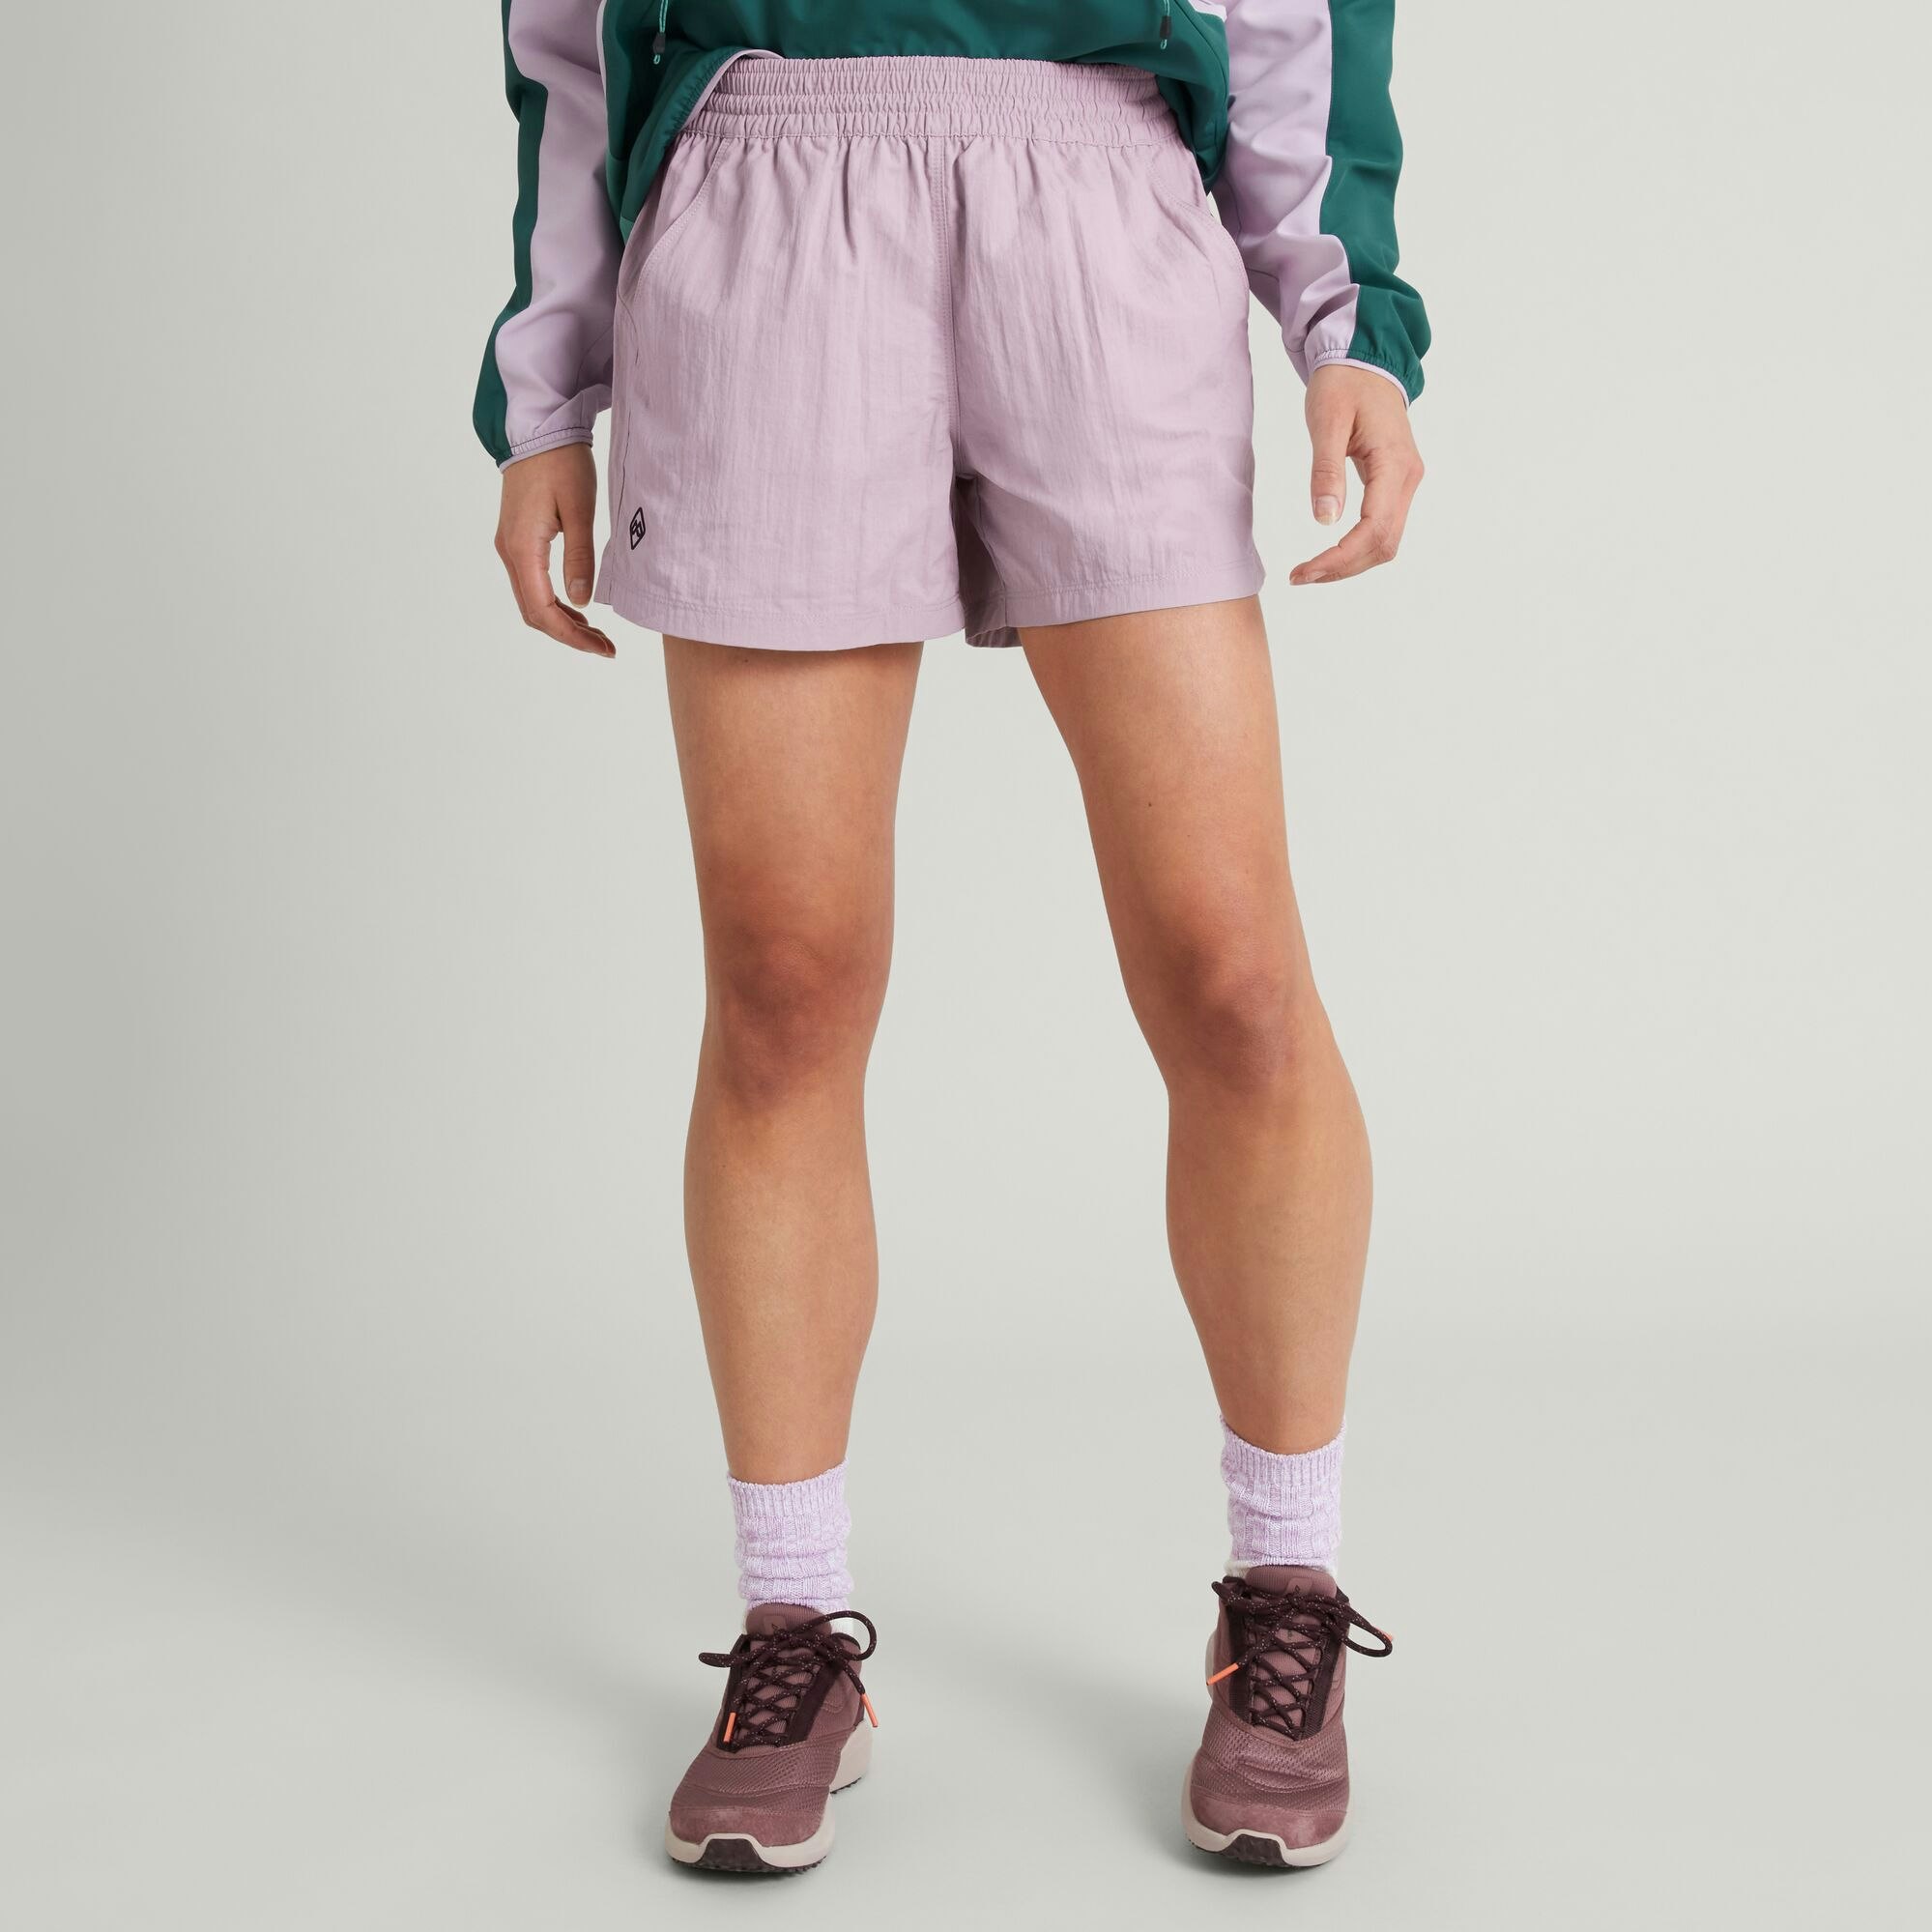 Lululemon size for neon green, 4 inch shorts - Depop